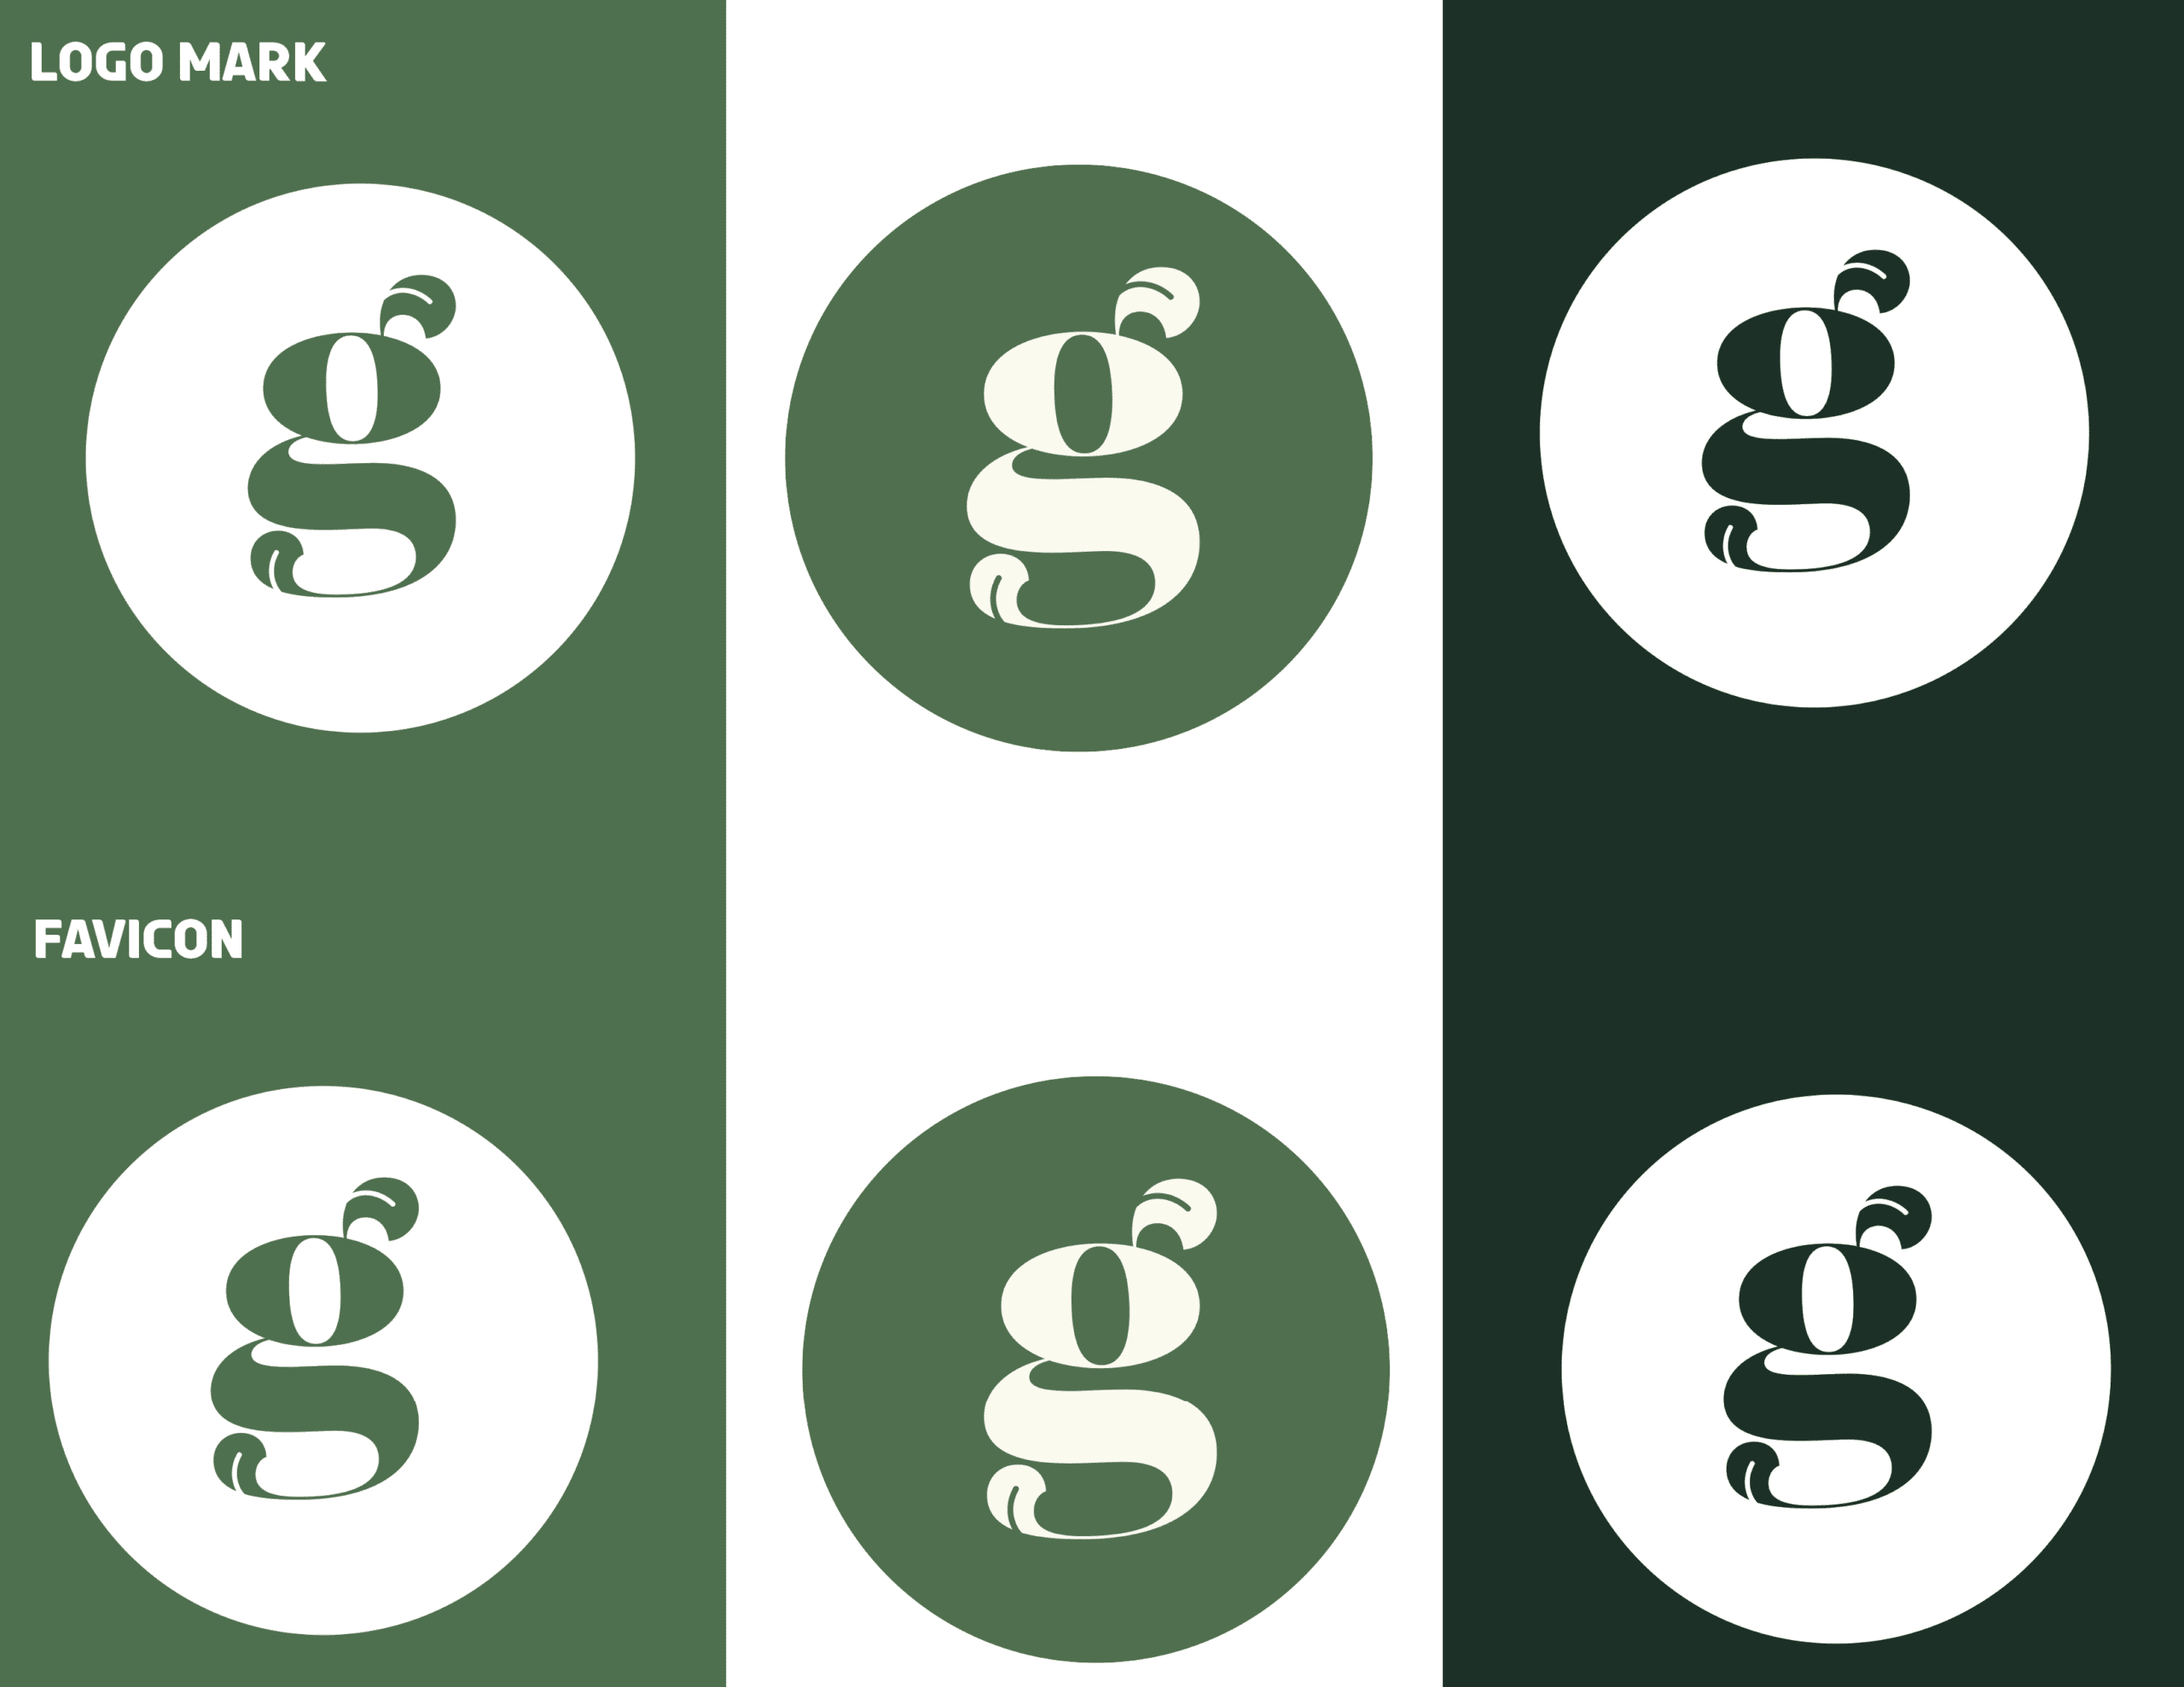 02_GreenerBookkeeping_Logo Mark _ Favicon